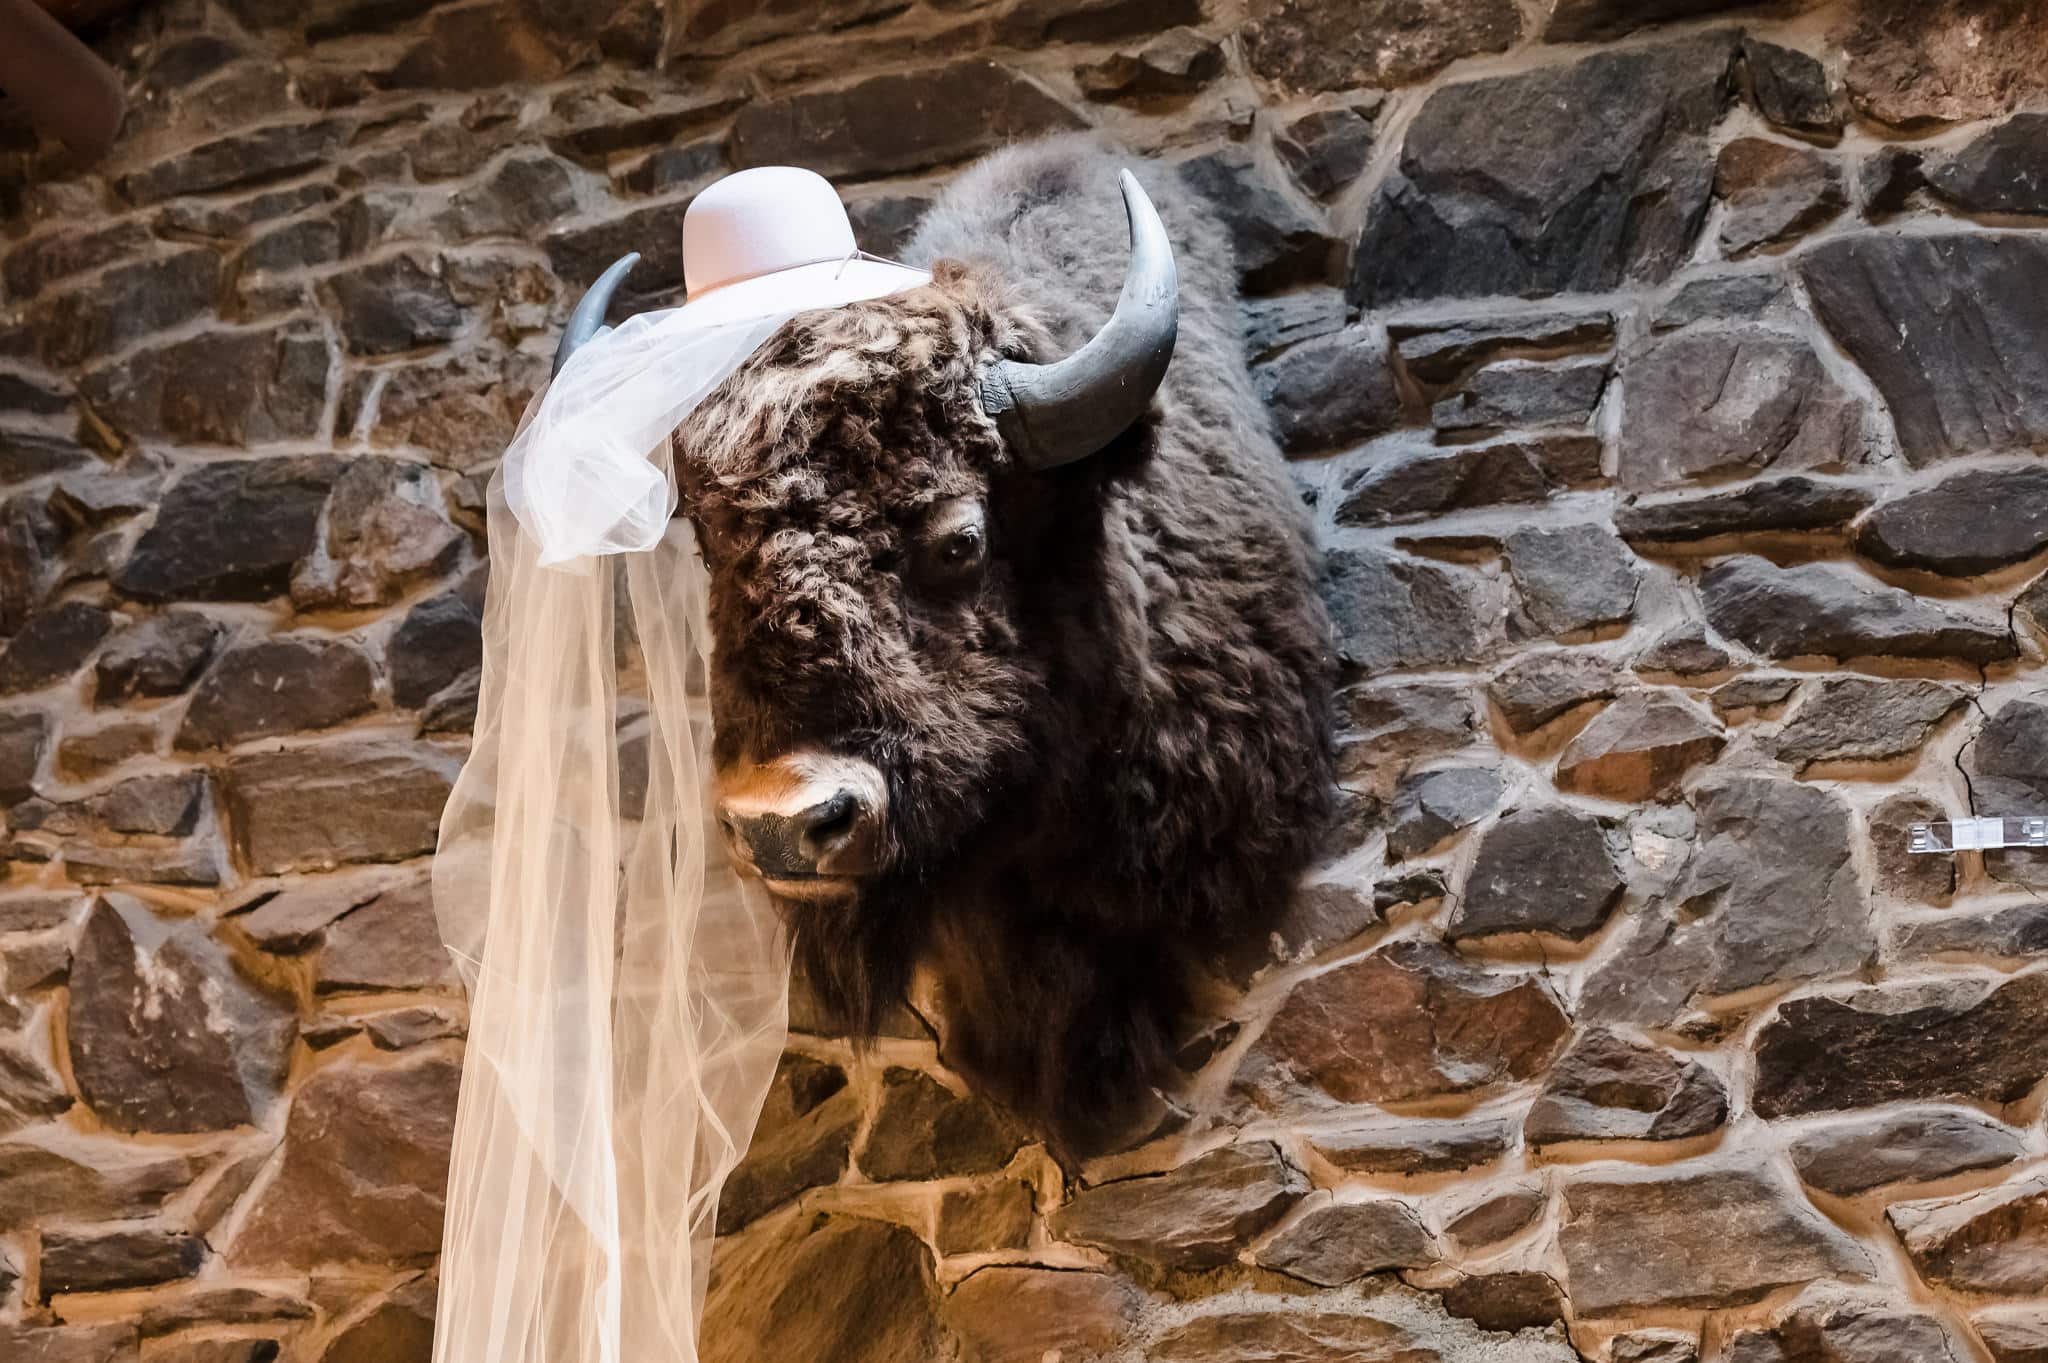 Stuffed buffalo with a veil.